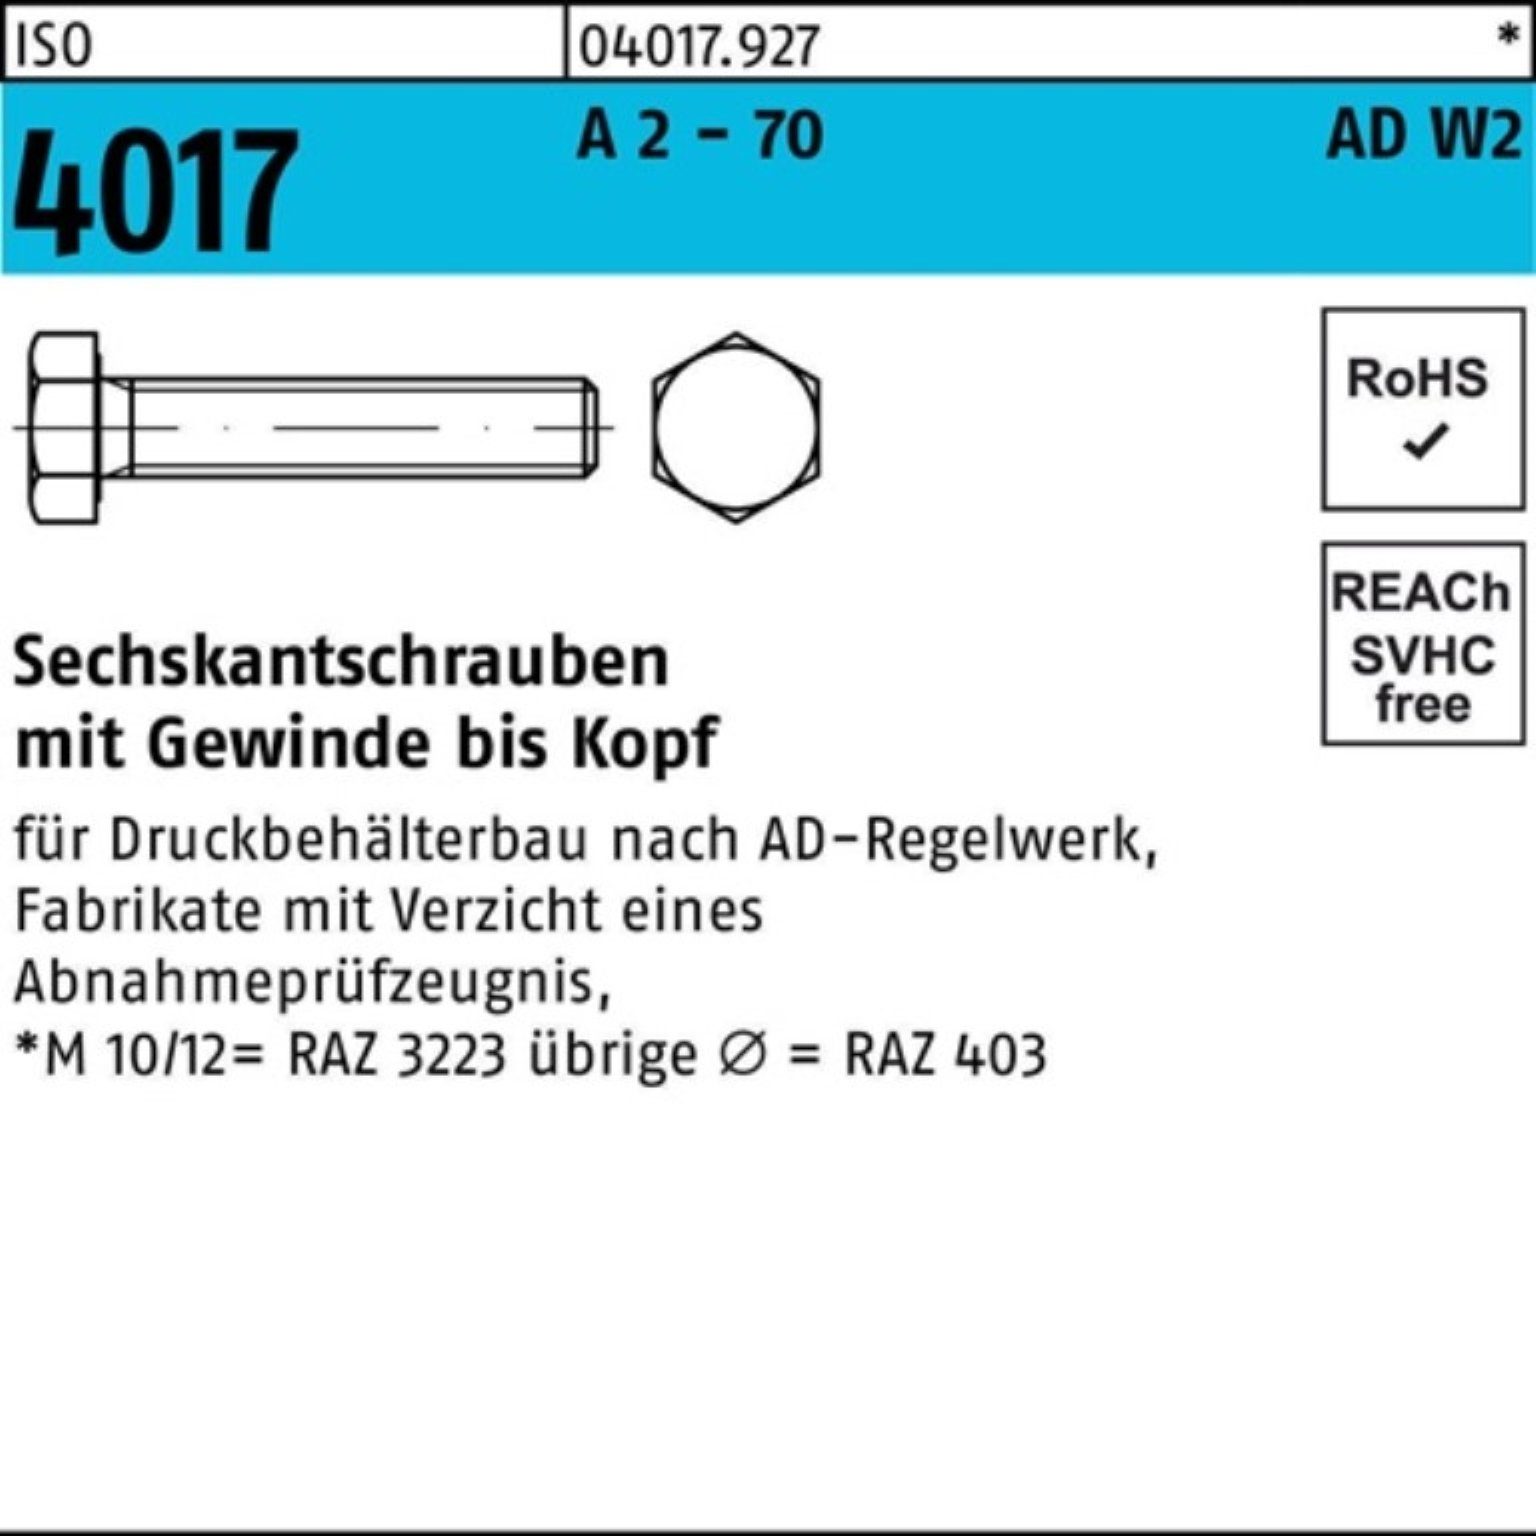 Bufab Sechskantschraube 100er Pack Sechskantschraube ISO 4017 VG M20x 45 A 2 - 70 AD-W2 25 St